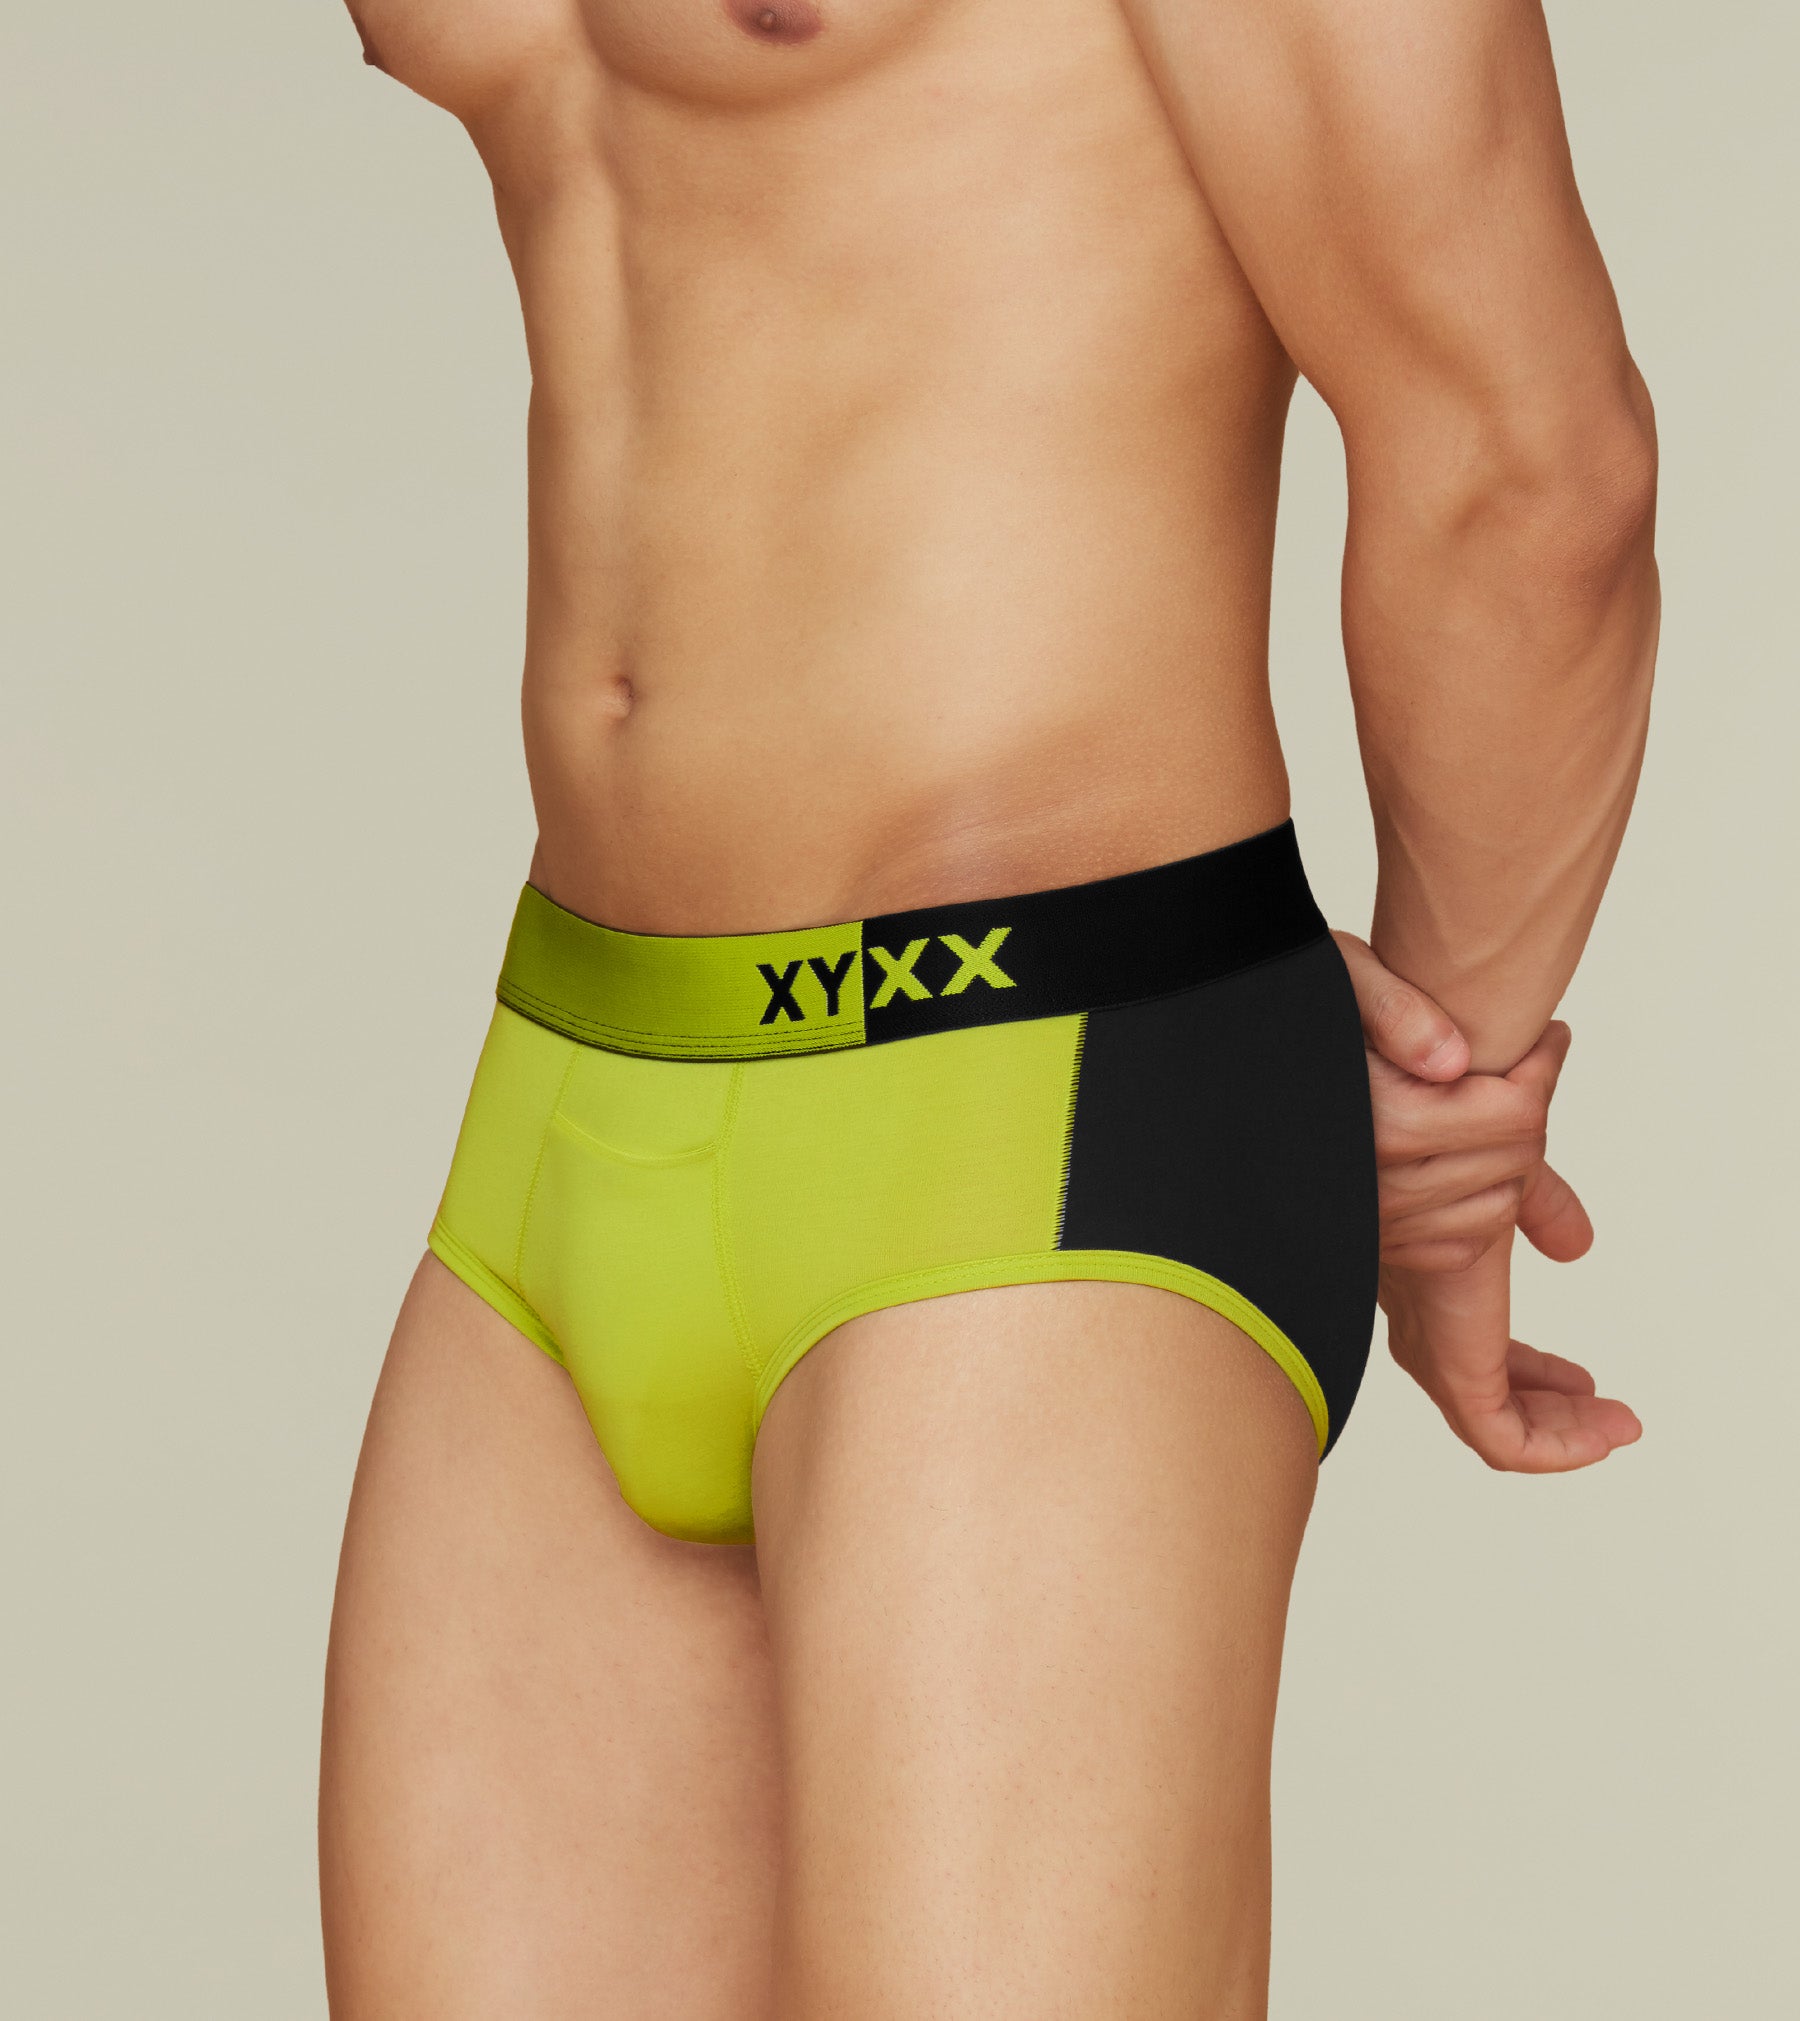 Dualist Modal Briefs For Men Pack of 3 (Aqua Blue, Lime Yellow, Blue) -  XYXX Mens Apparels